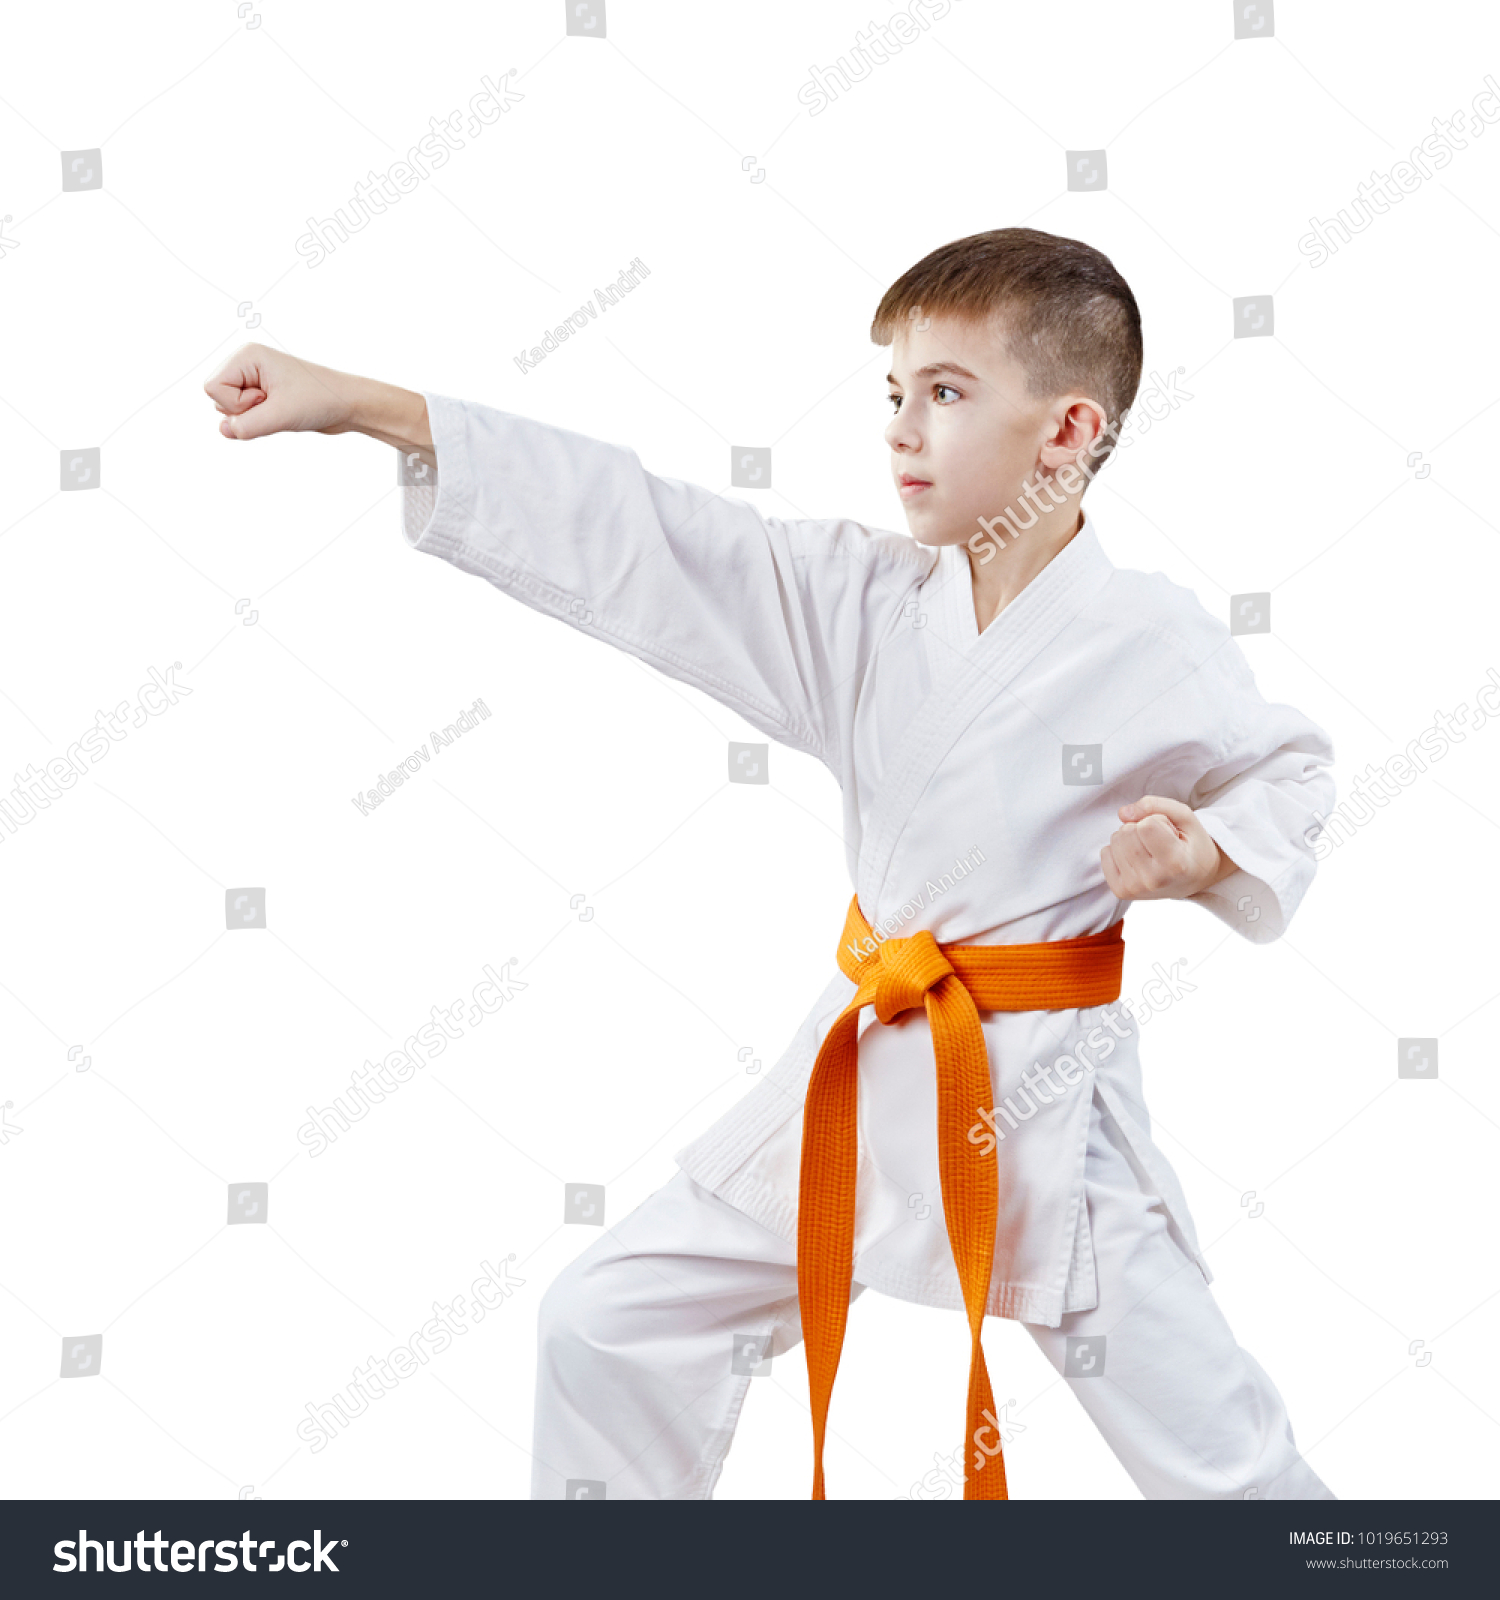 In karategi, the boy sportsman strikes with a hand #1019651293